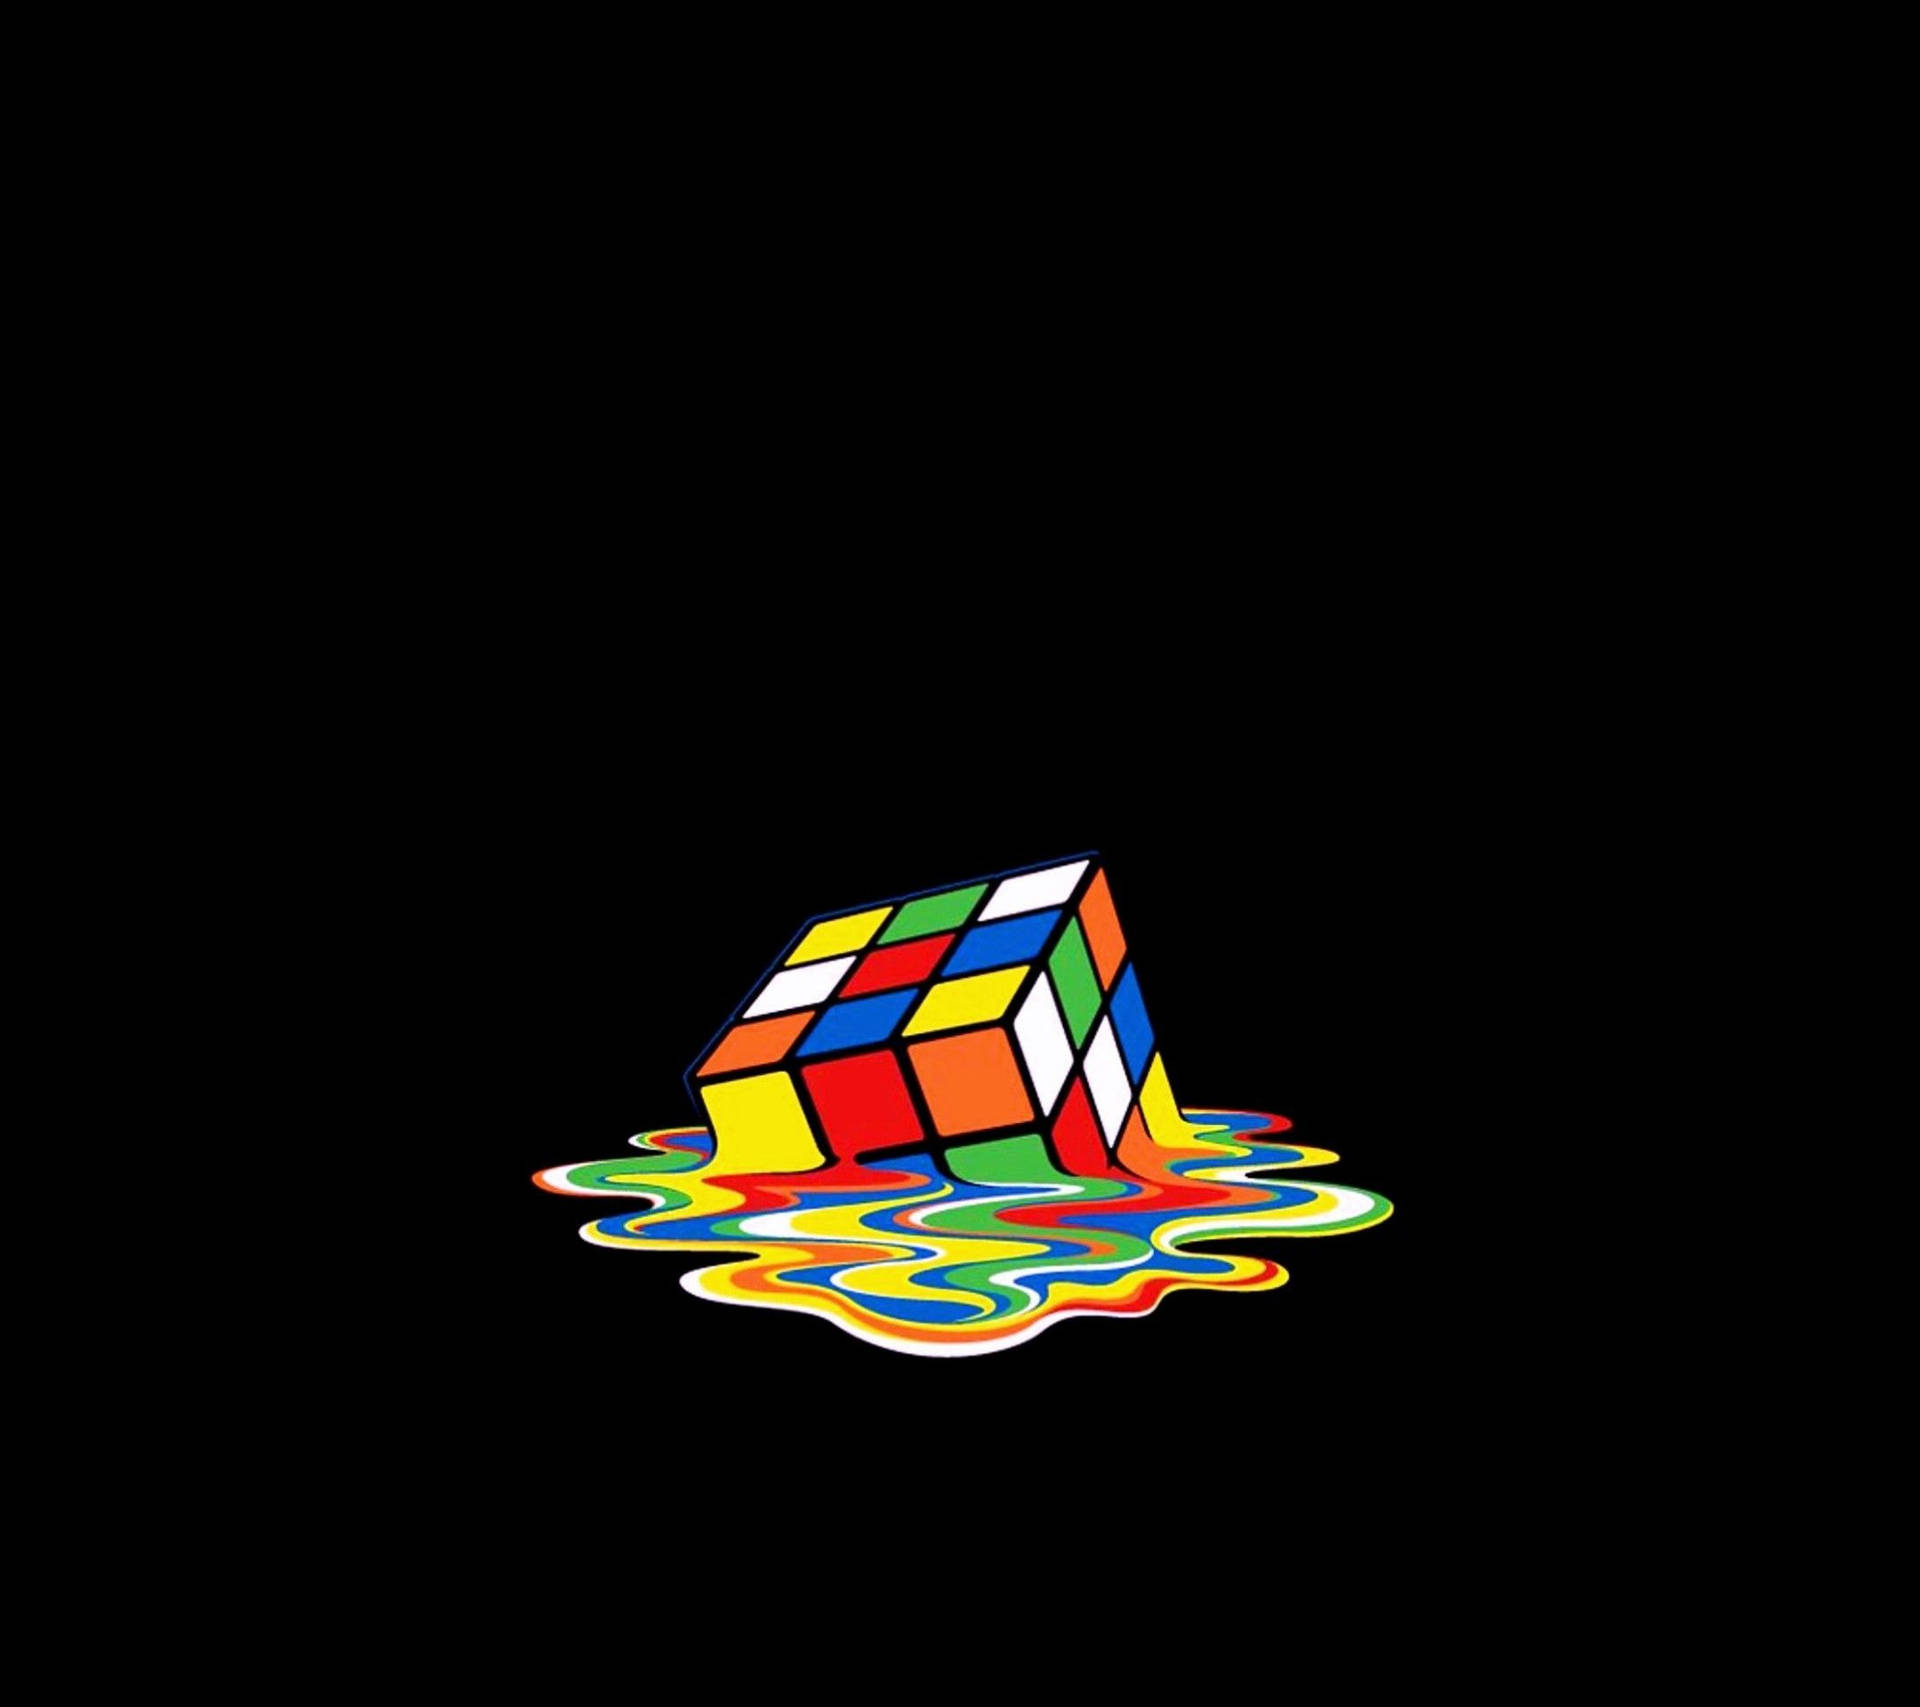 Amoled Melted Rubiks Cube Wallpaper